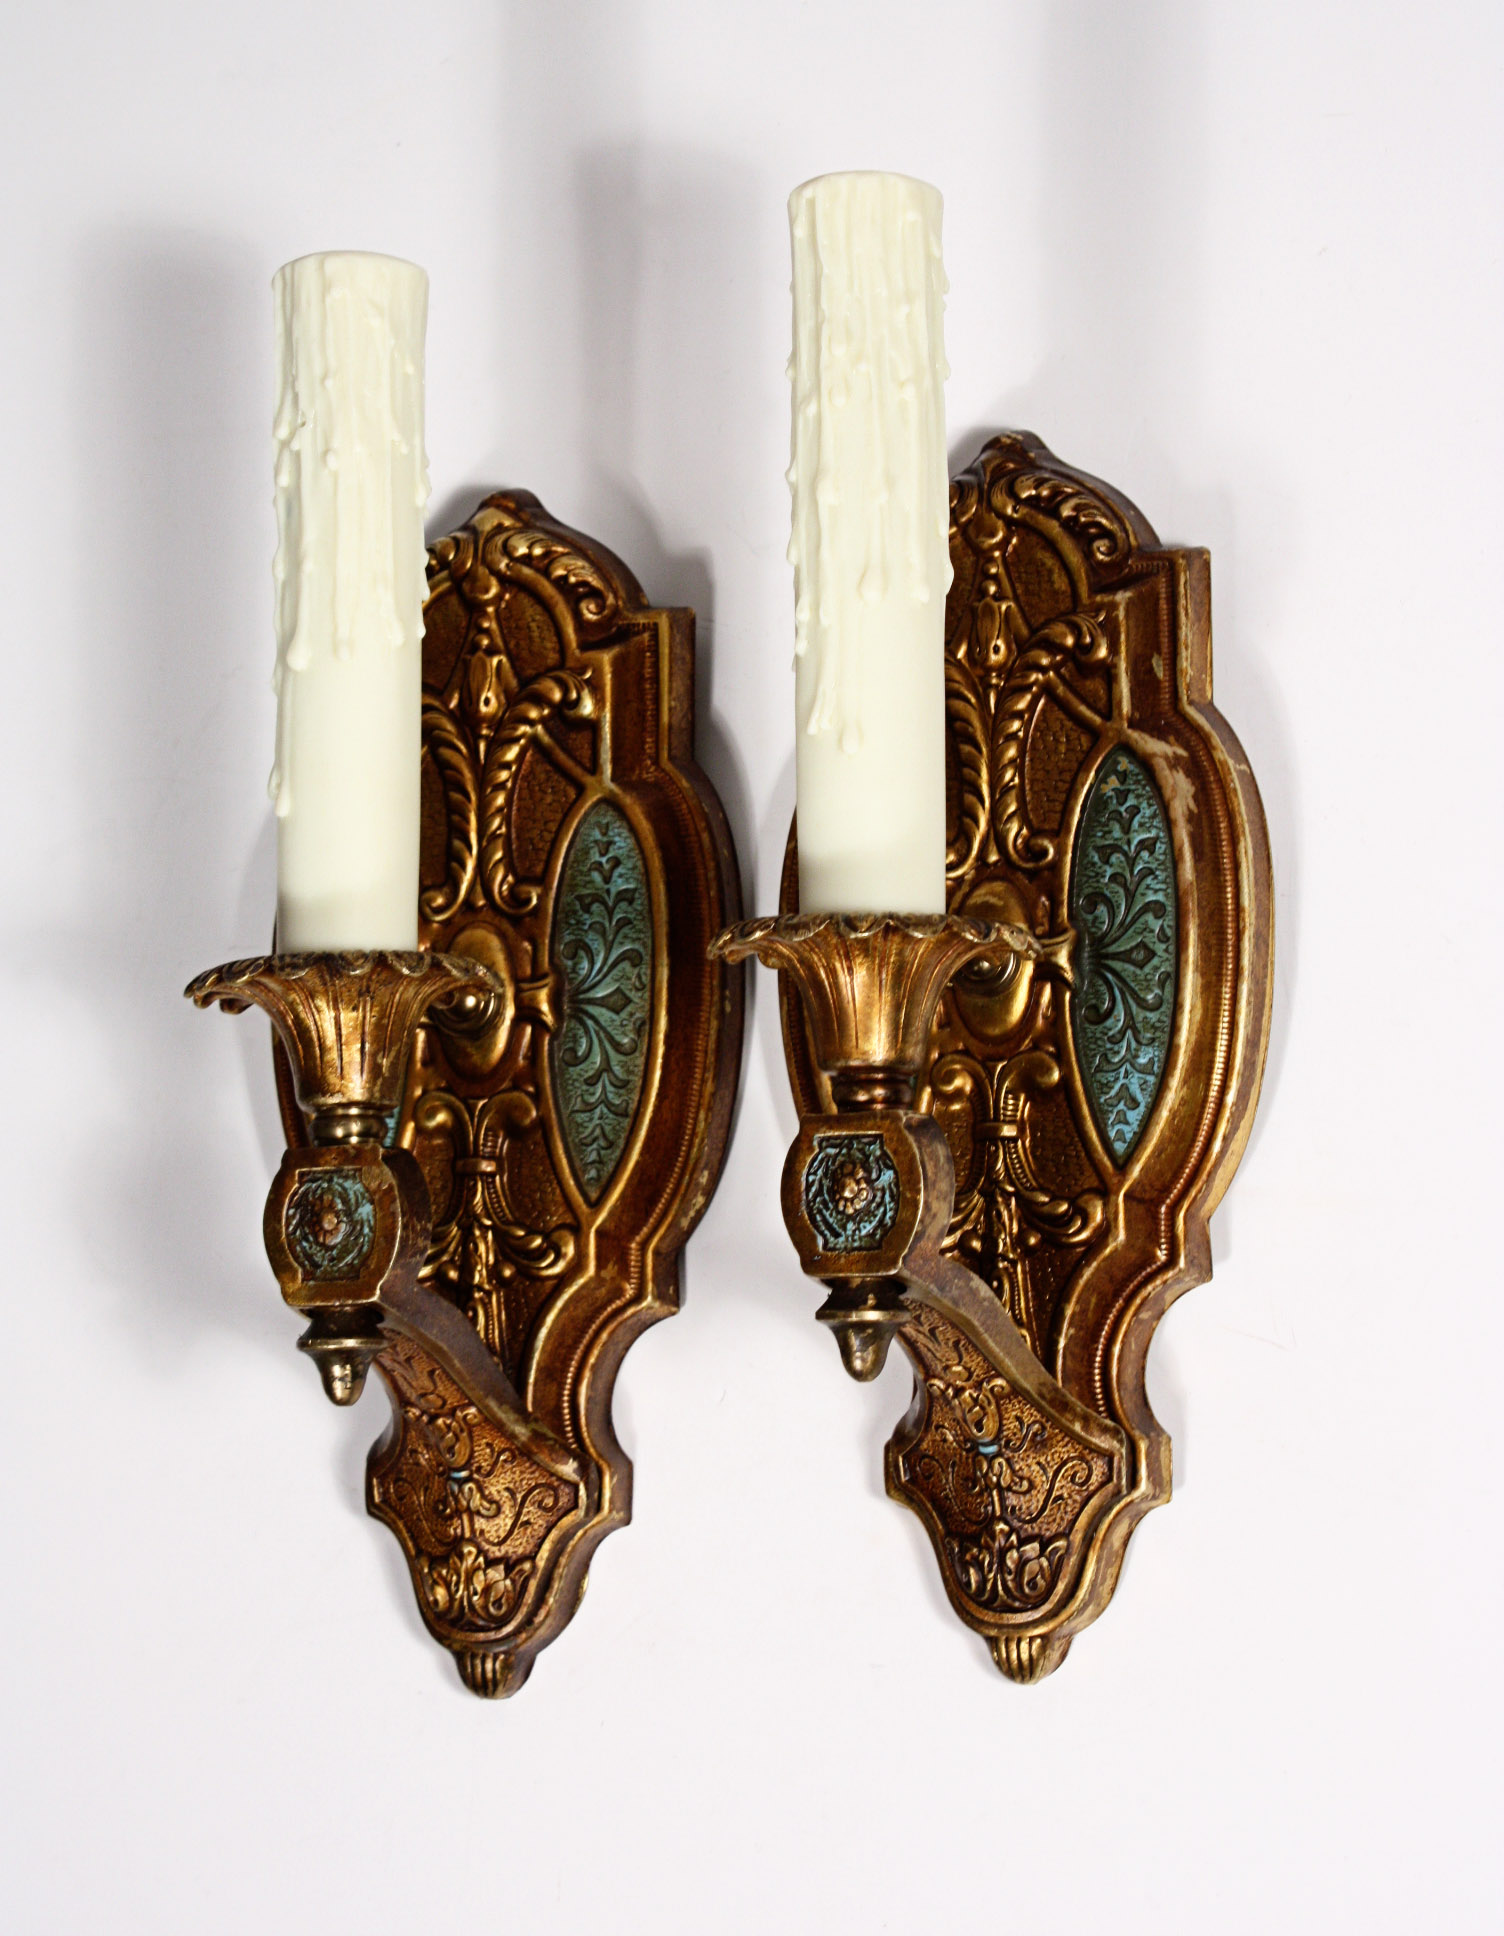 SOLD Wonderful Pair of Antique Brass Single-Arm Sconces, Original Turquoise Polychrome Finish-0